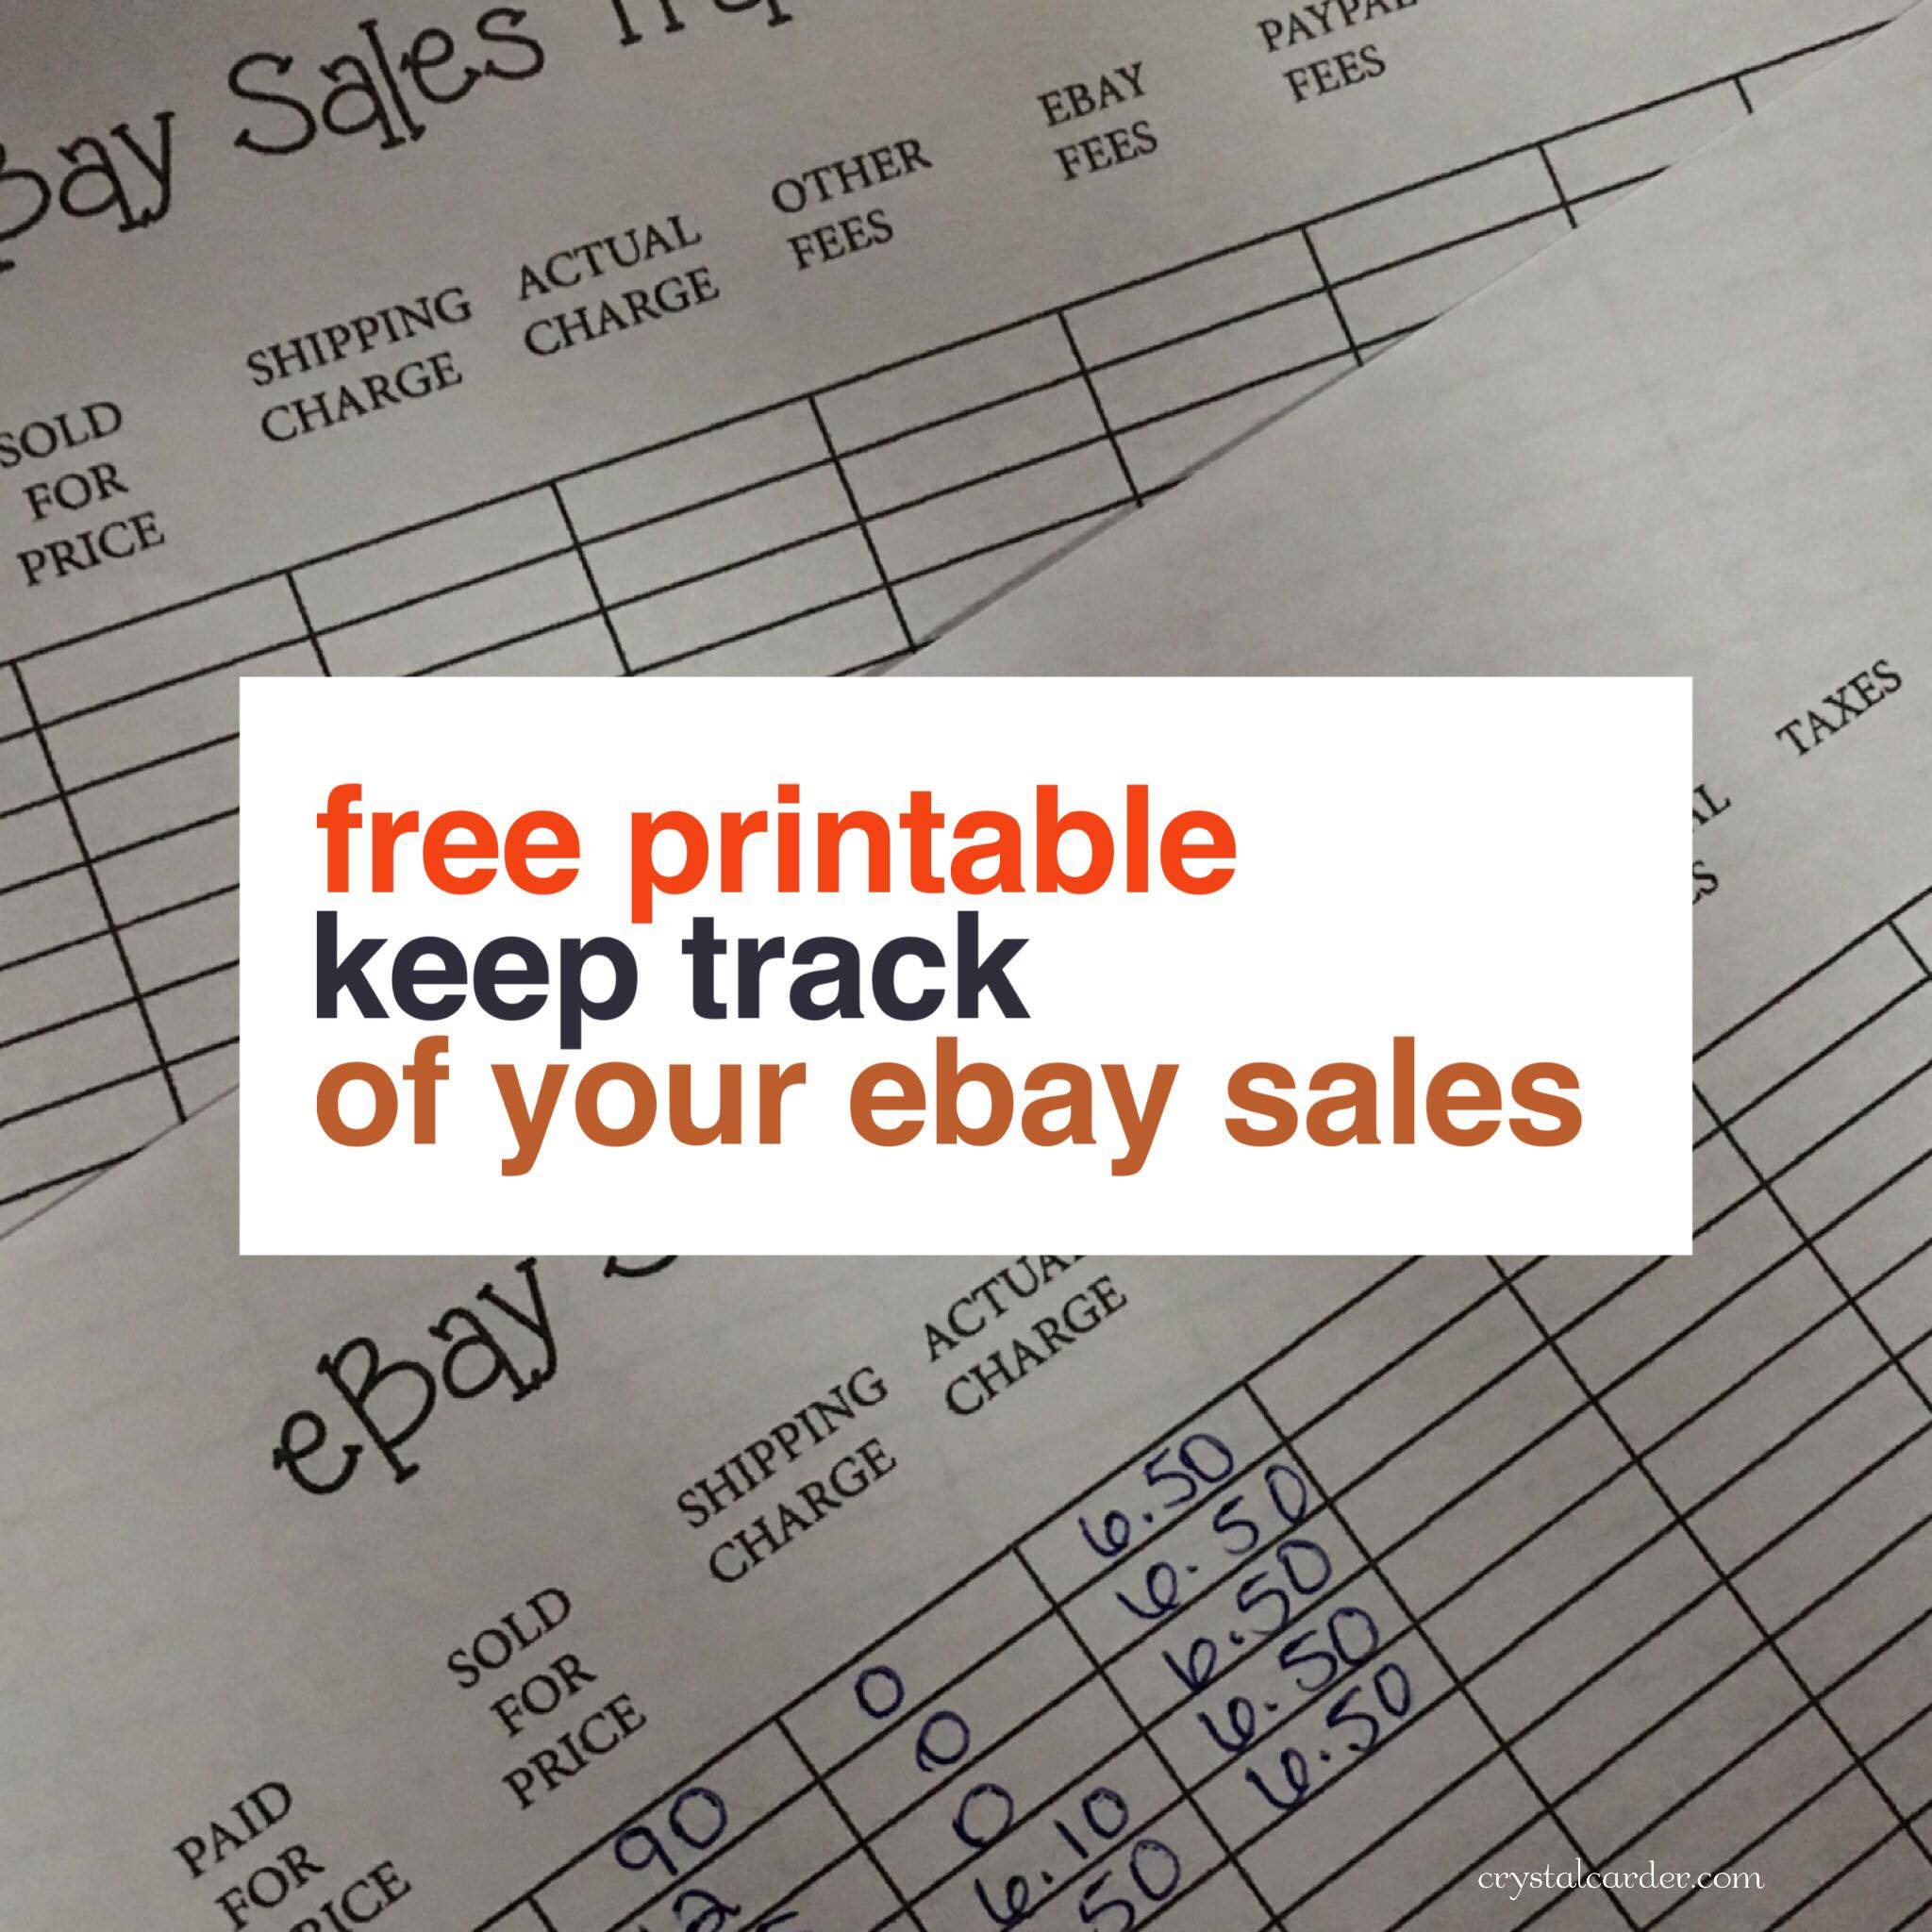 Free Ebay Sales Tracker Printable - Crystal Carder In Free Ebay Sales Tracking Spreadsheet